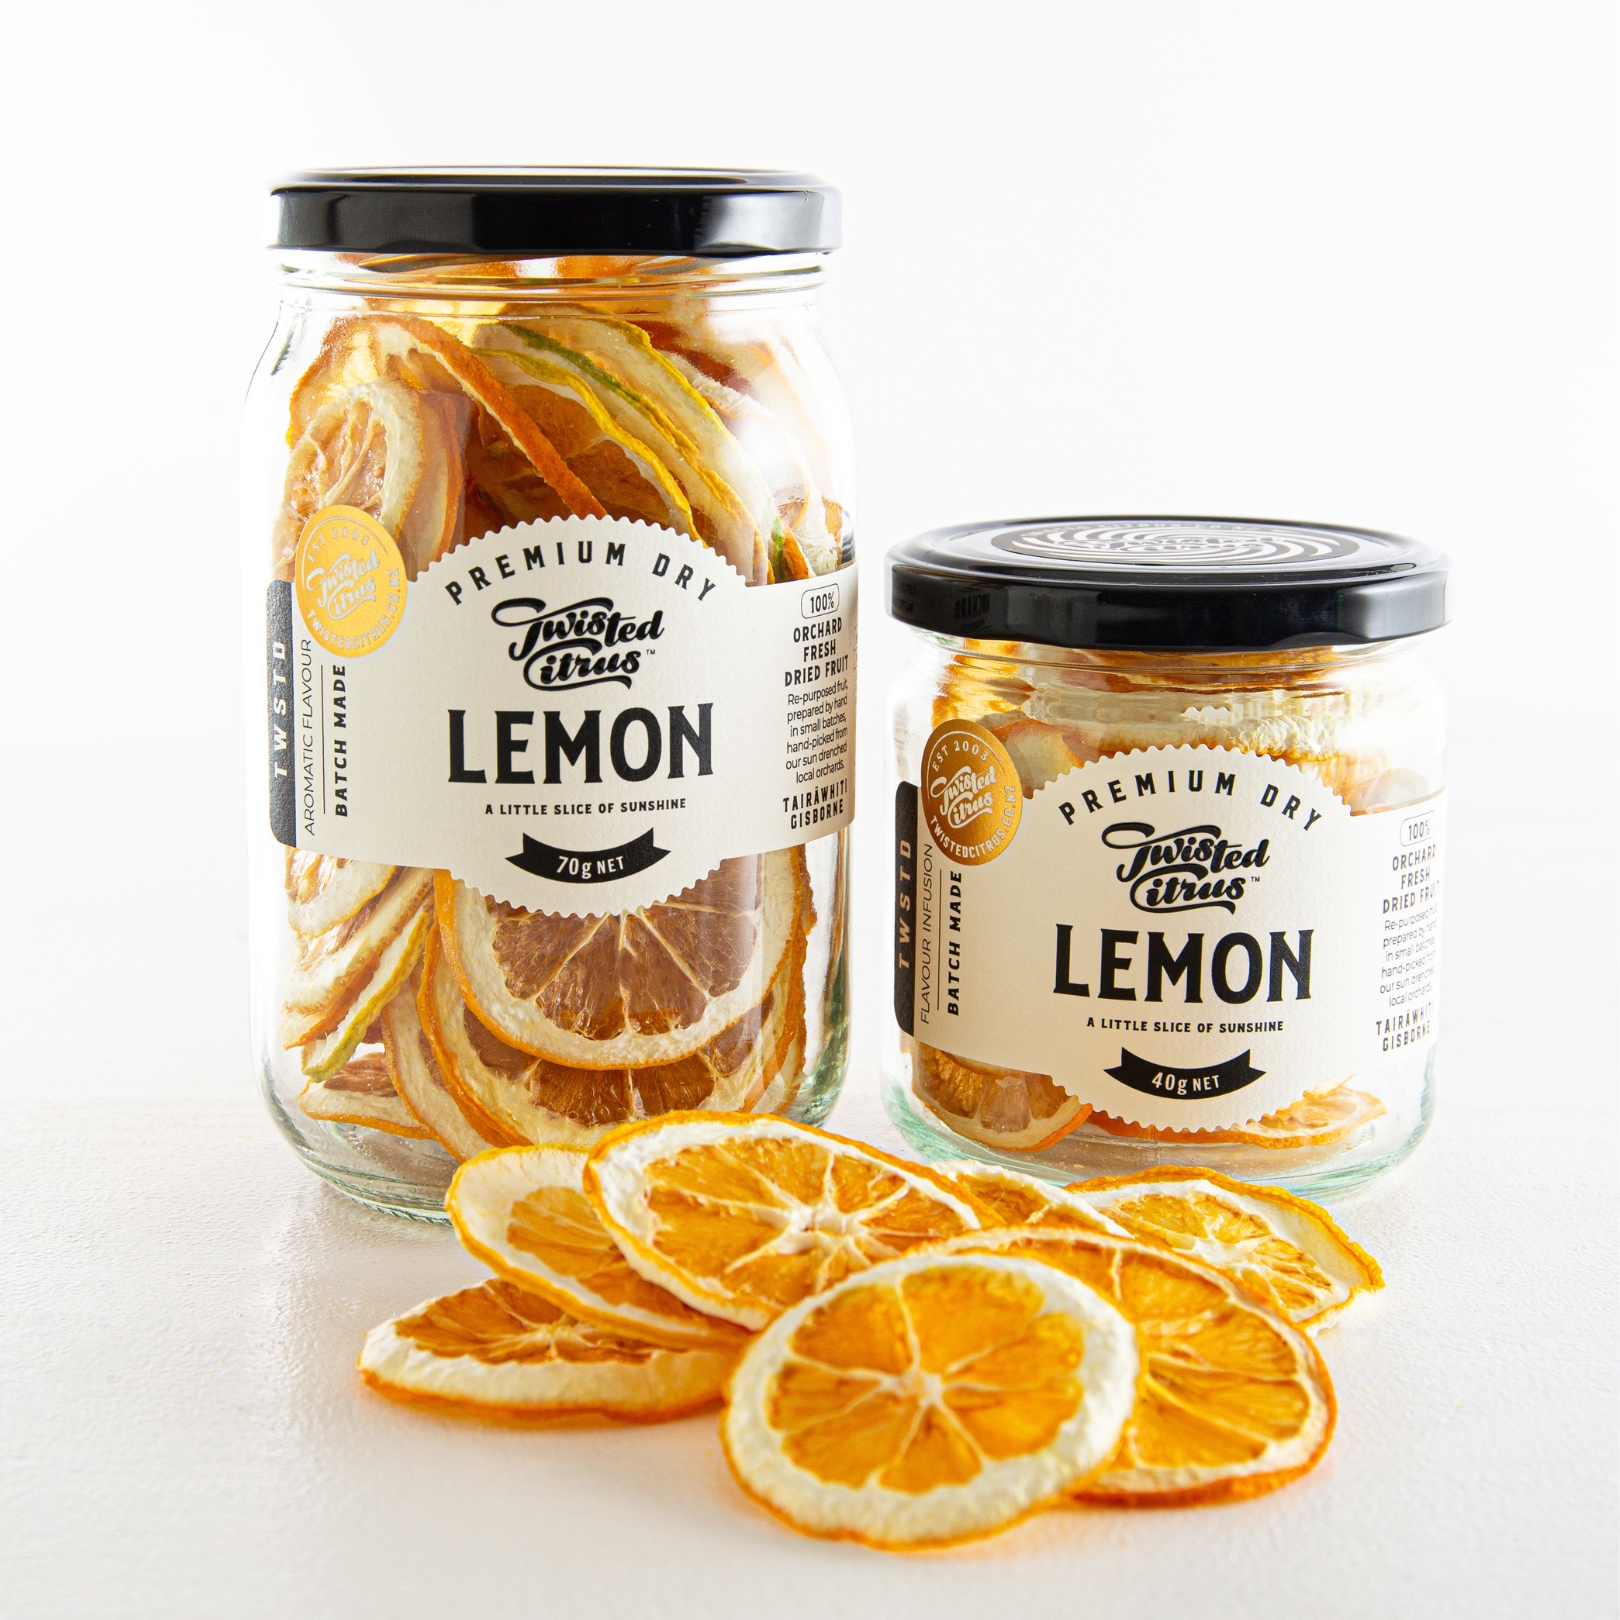 Buy Twisted Dried Fruit - Lemon Online NZ - Twisted Citrus